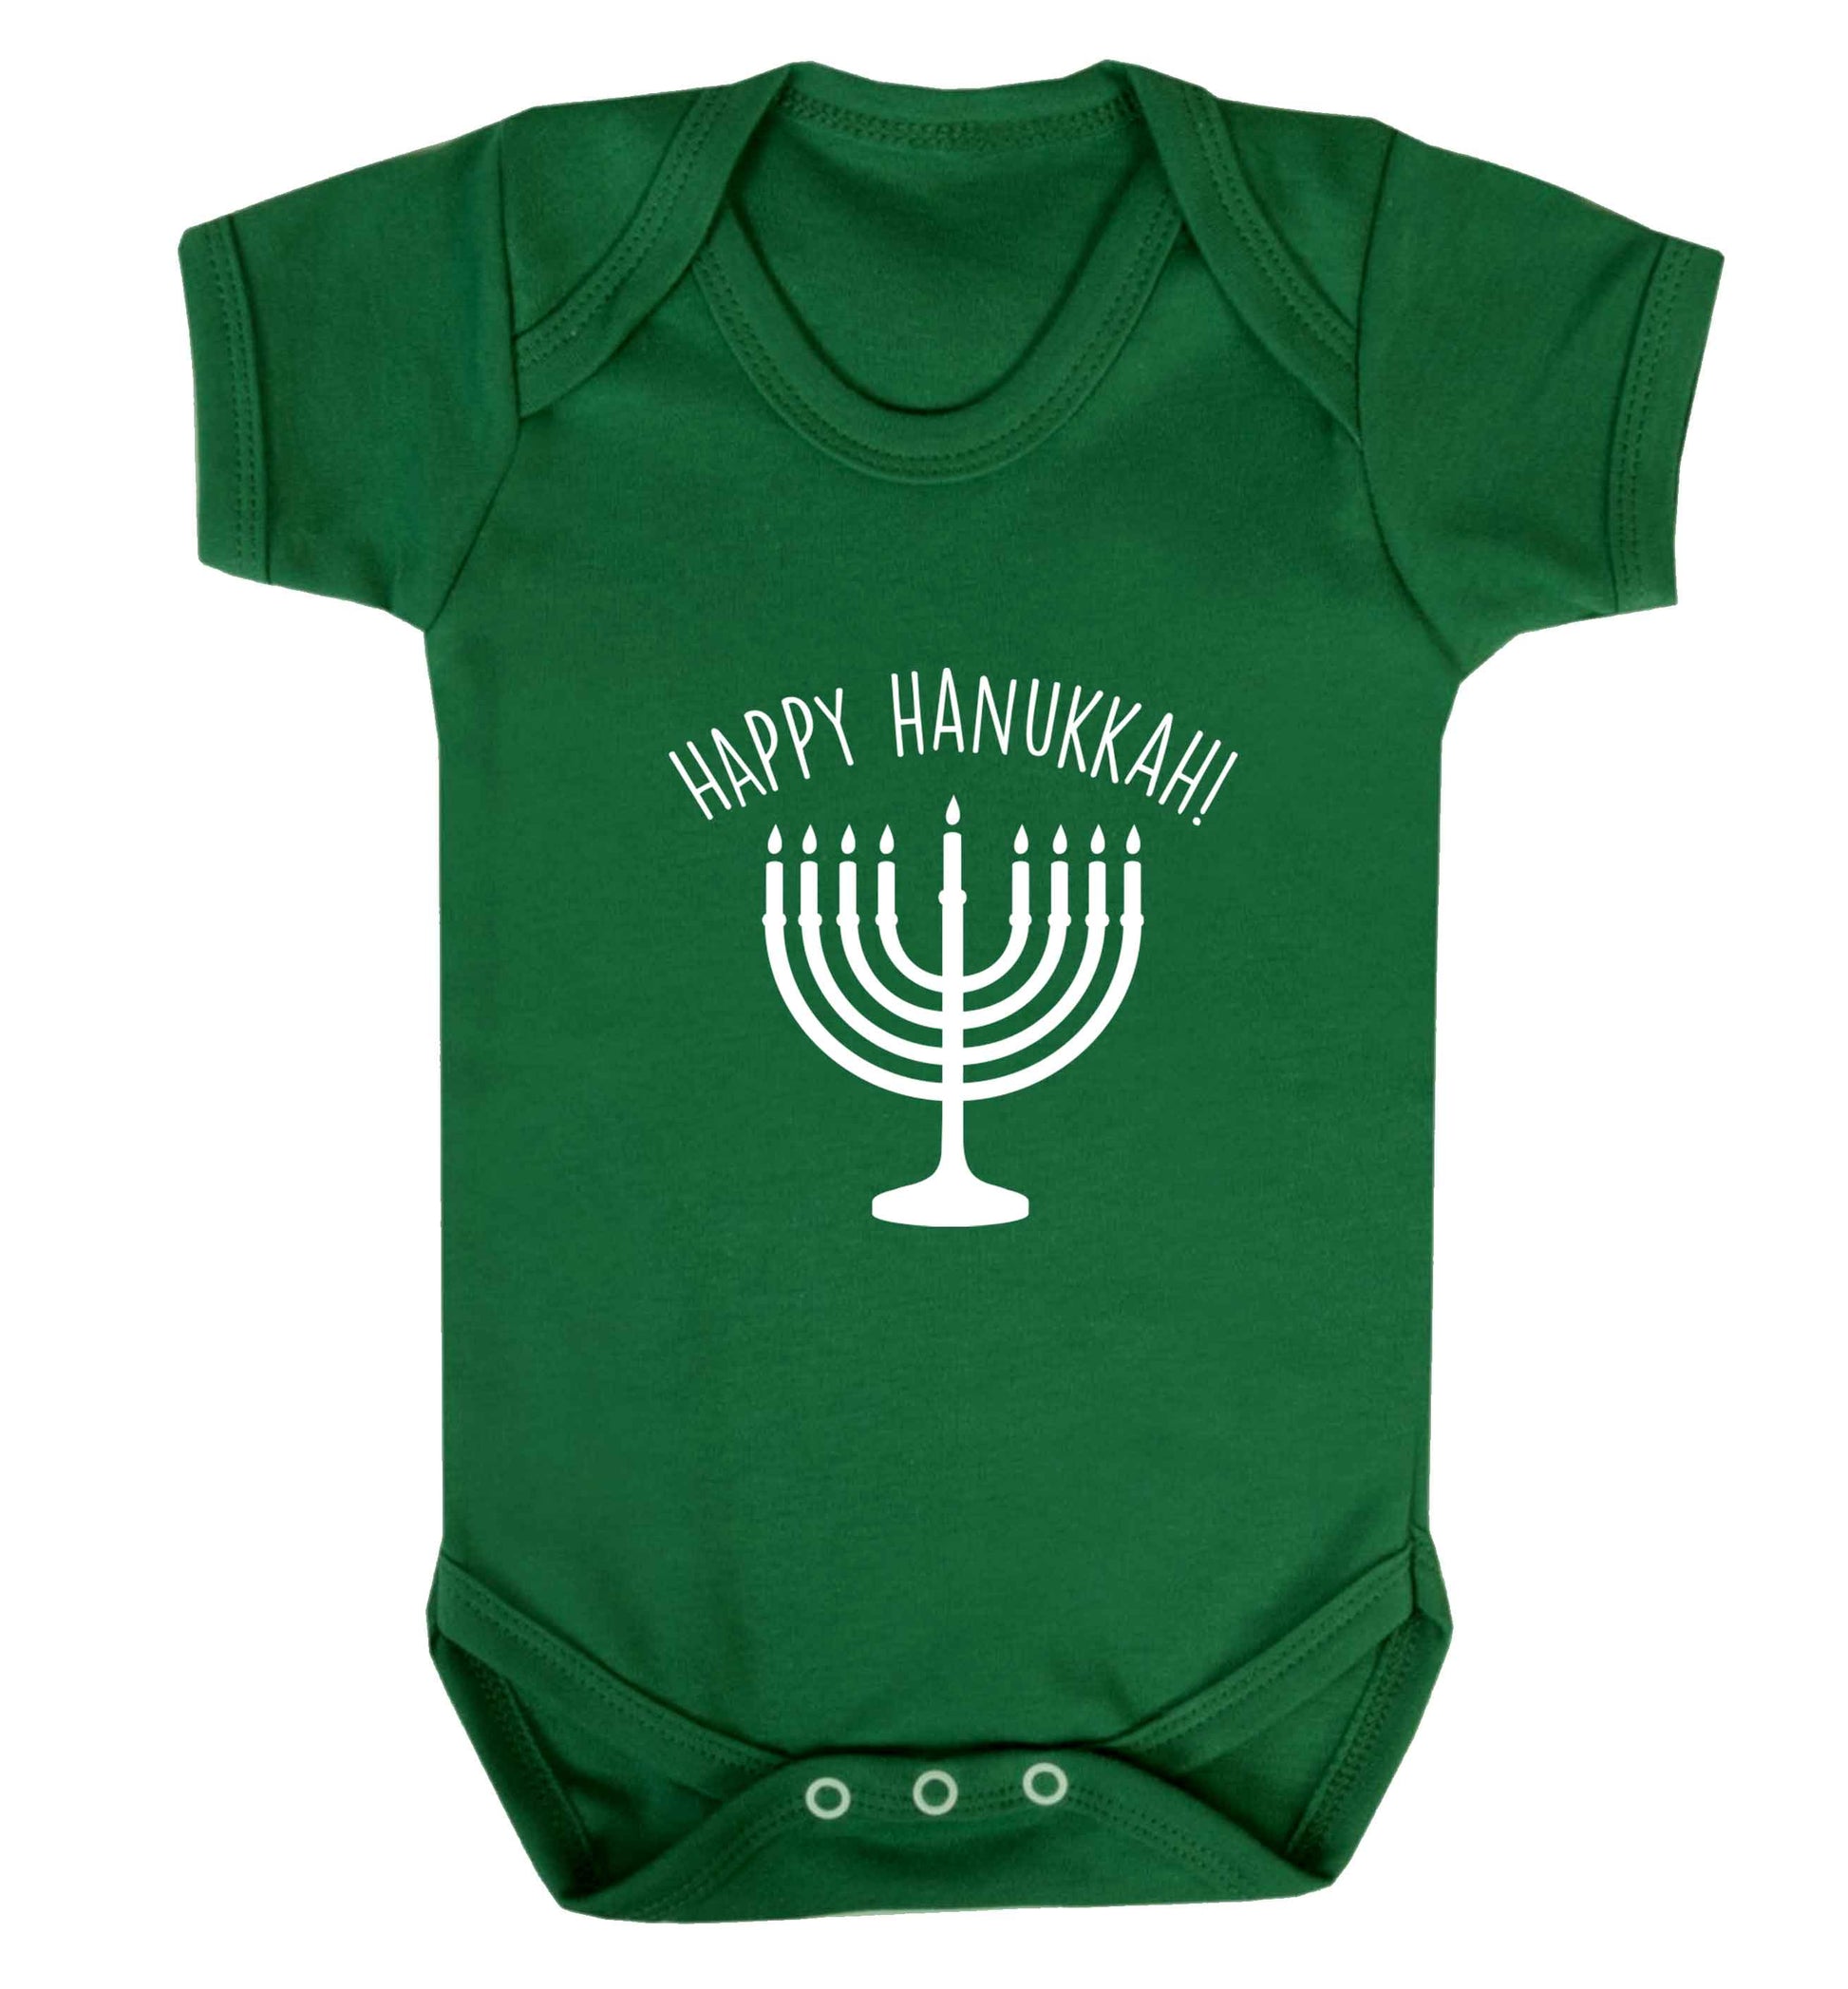 Happy hanukkah baby vest green 18-24 months